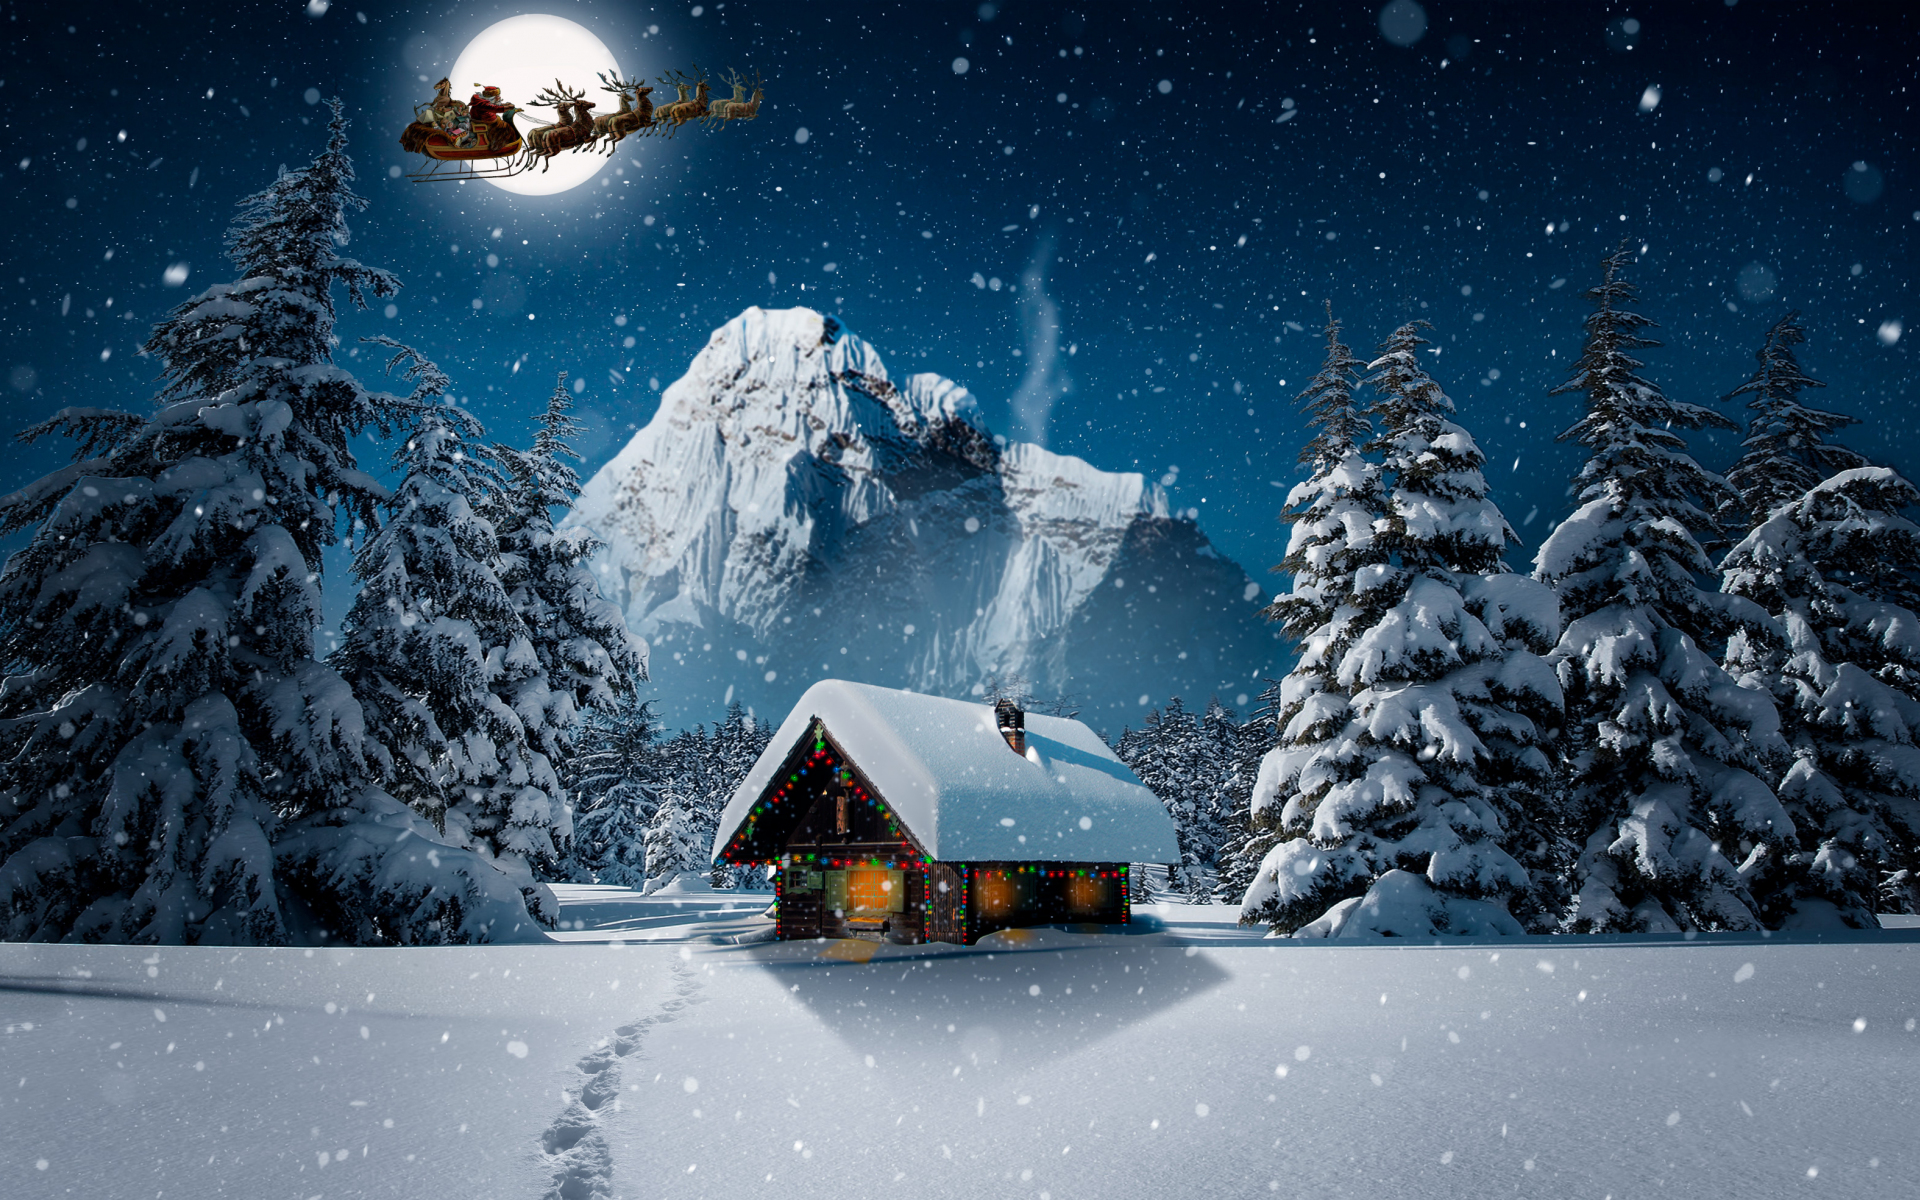 Download wallpaper 1920x1200 snowfall, winter, hut, house, winter,  christmas, 16:10 widescreen 1920x1200 hd background, 17253